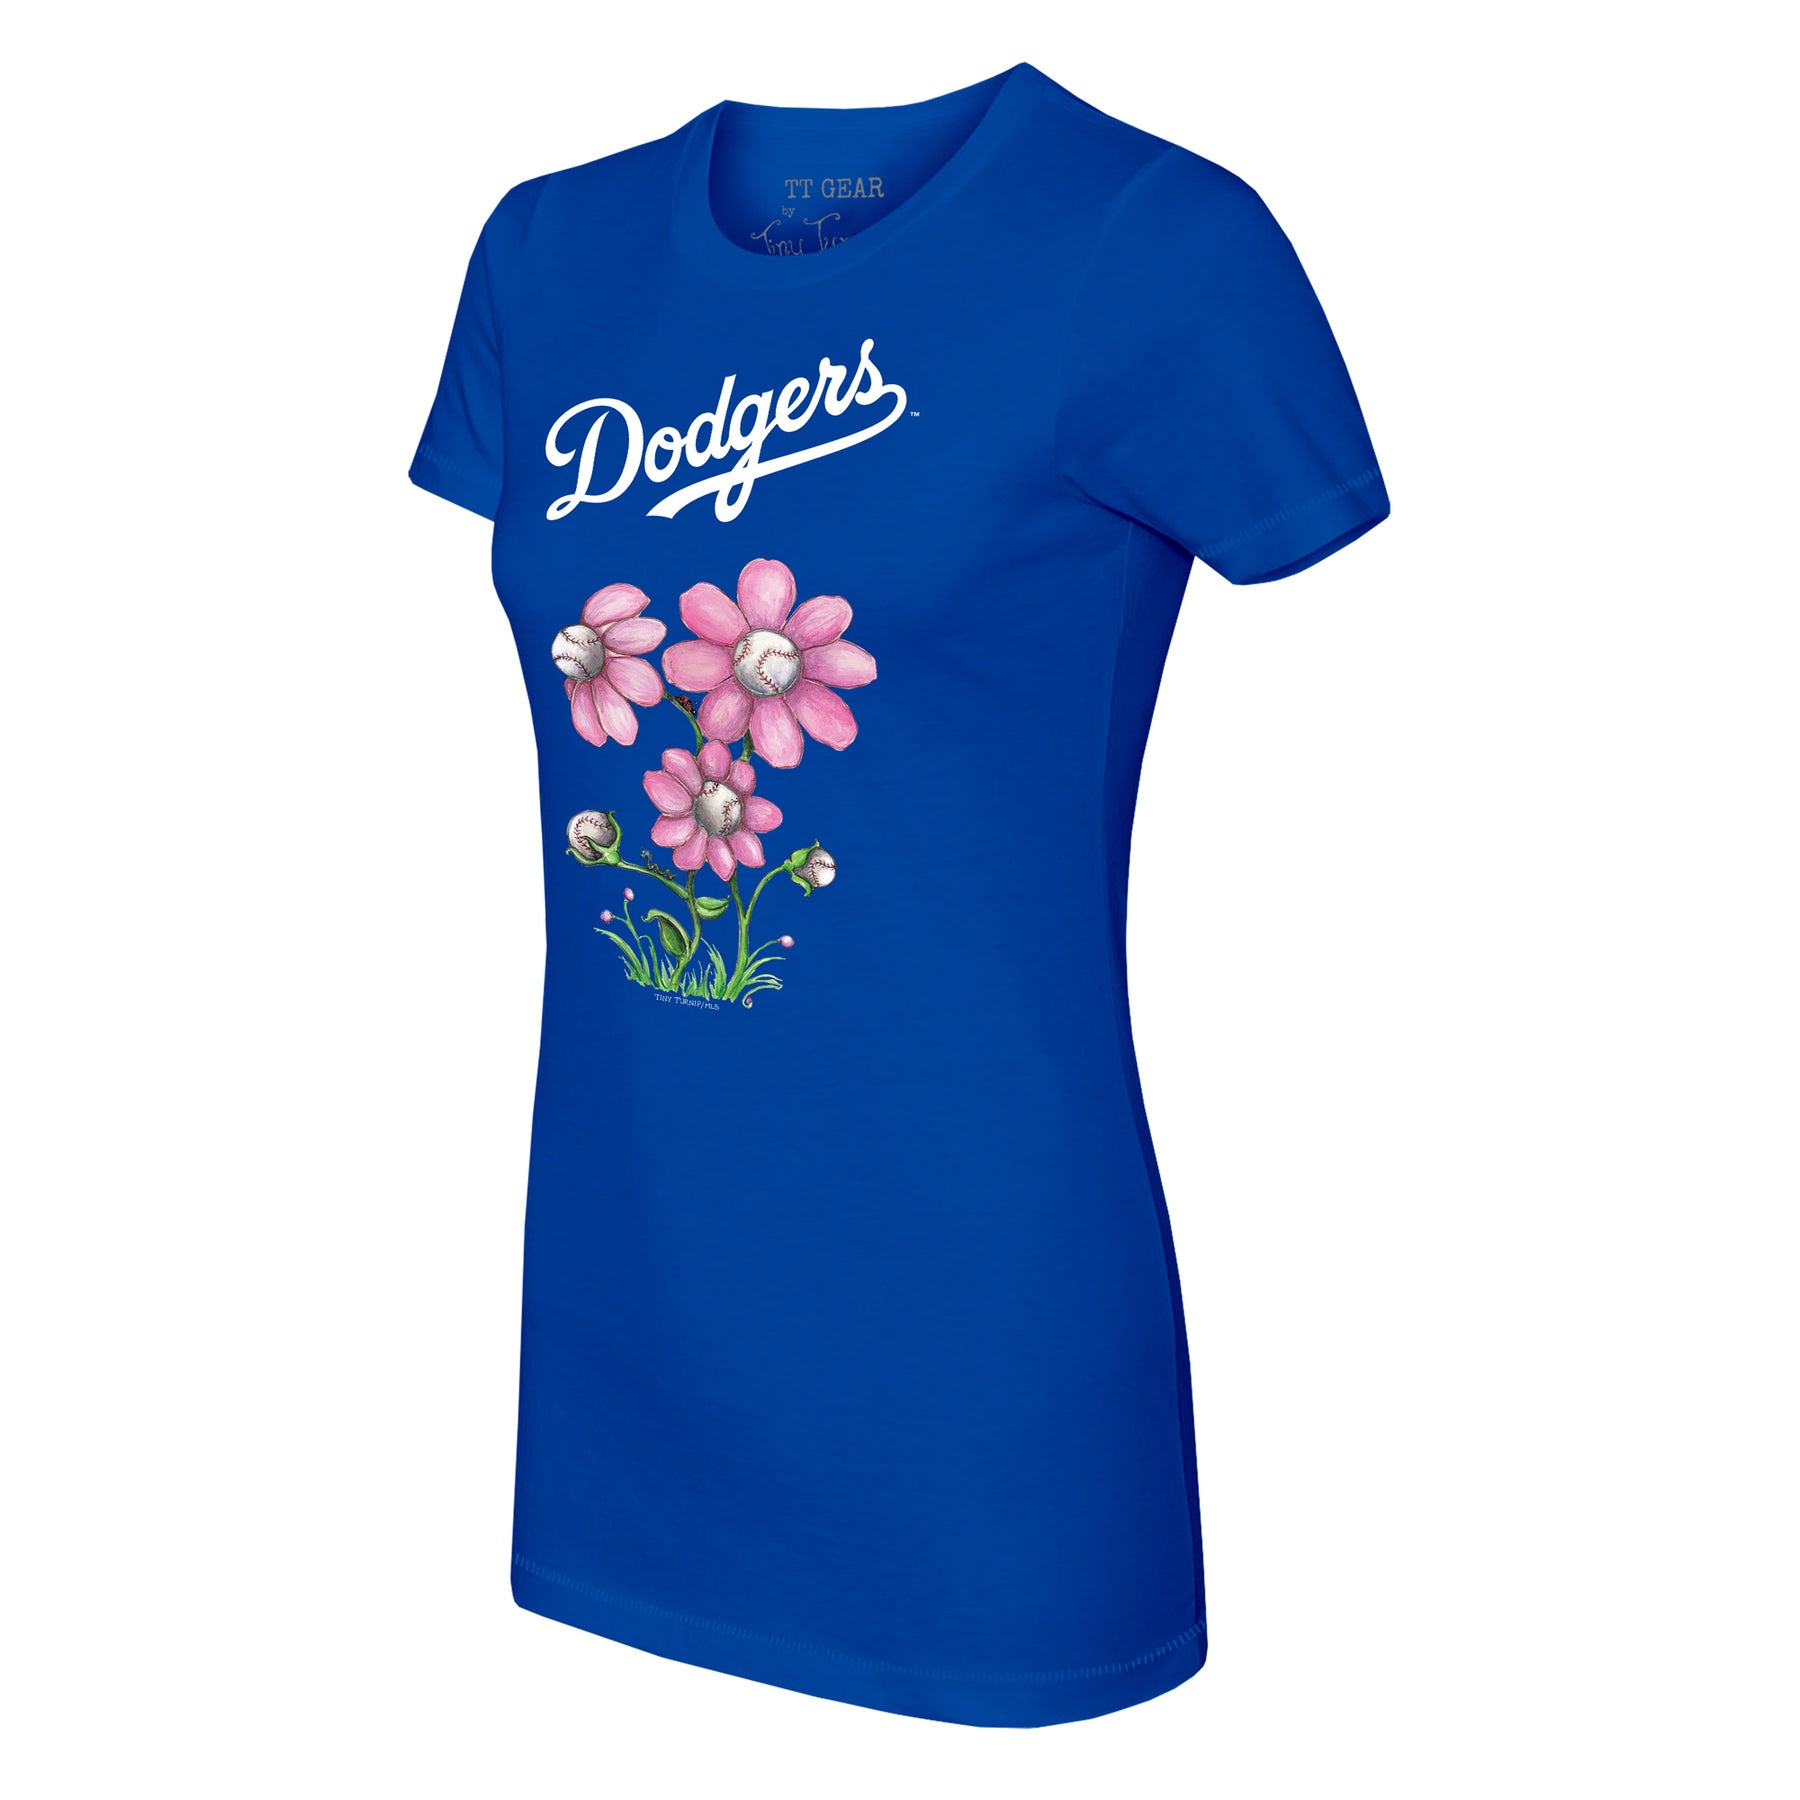 Los Angeles Dodgers Blooming Baseballs Tee Shirt